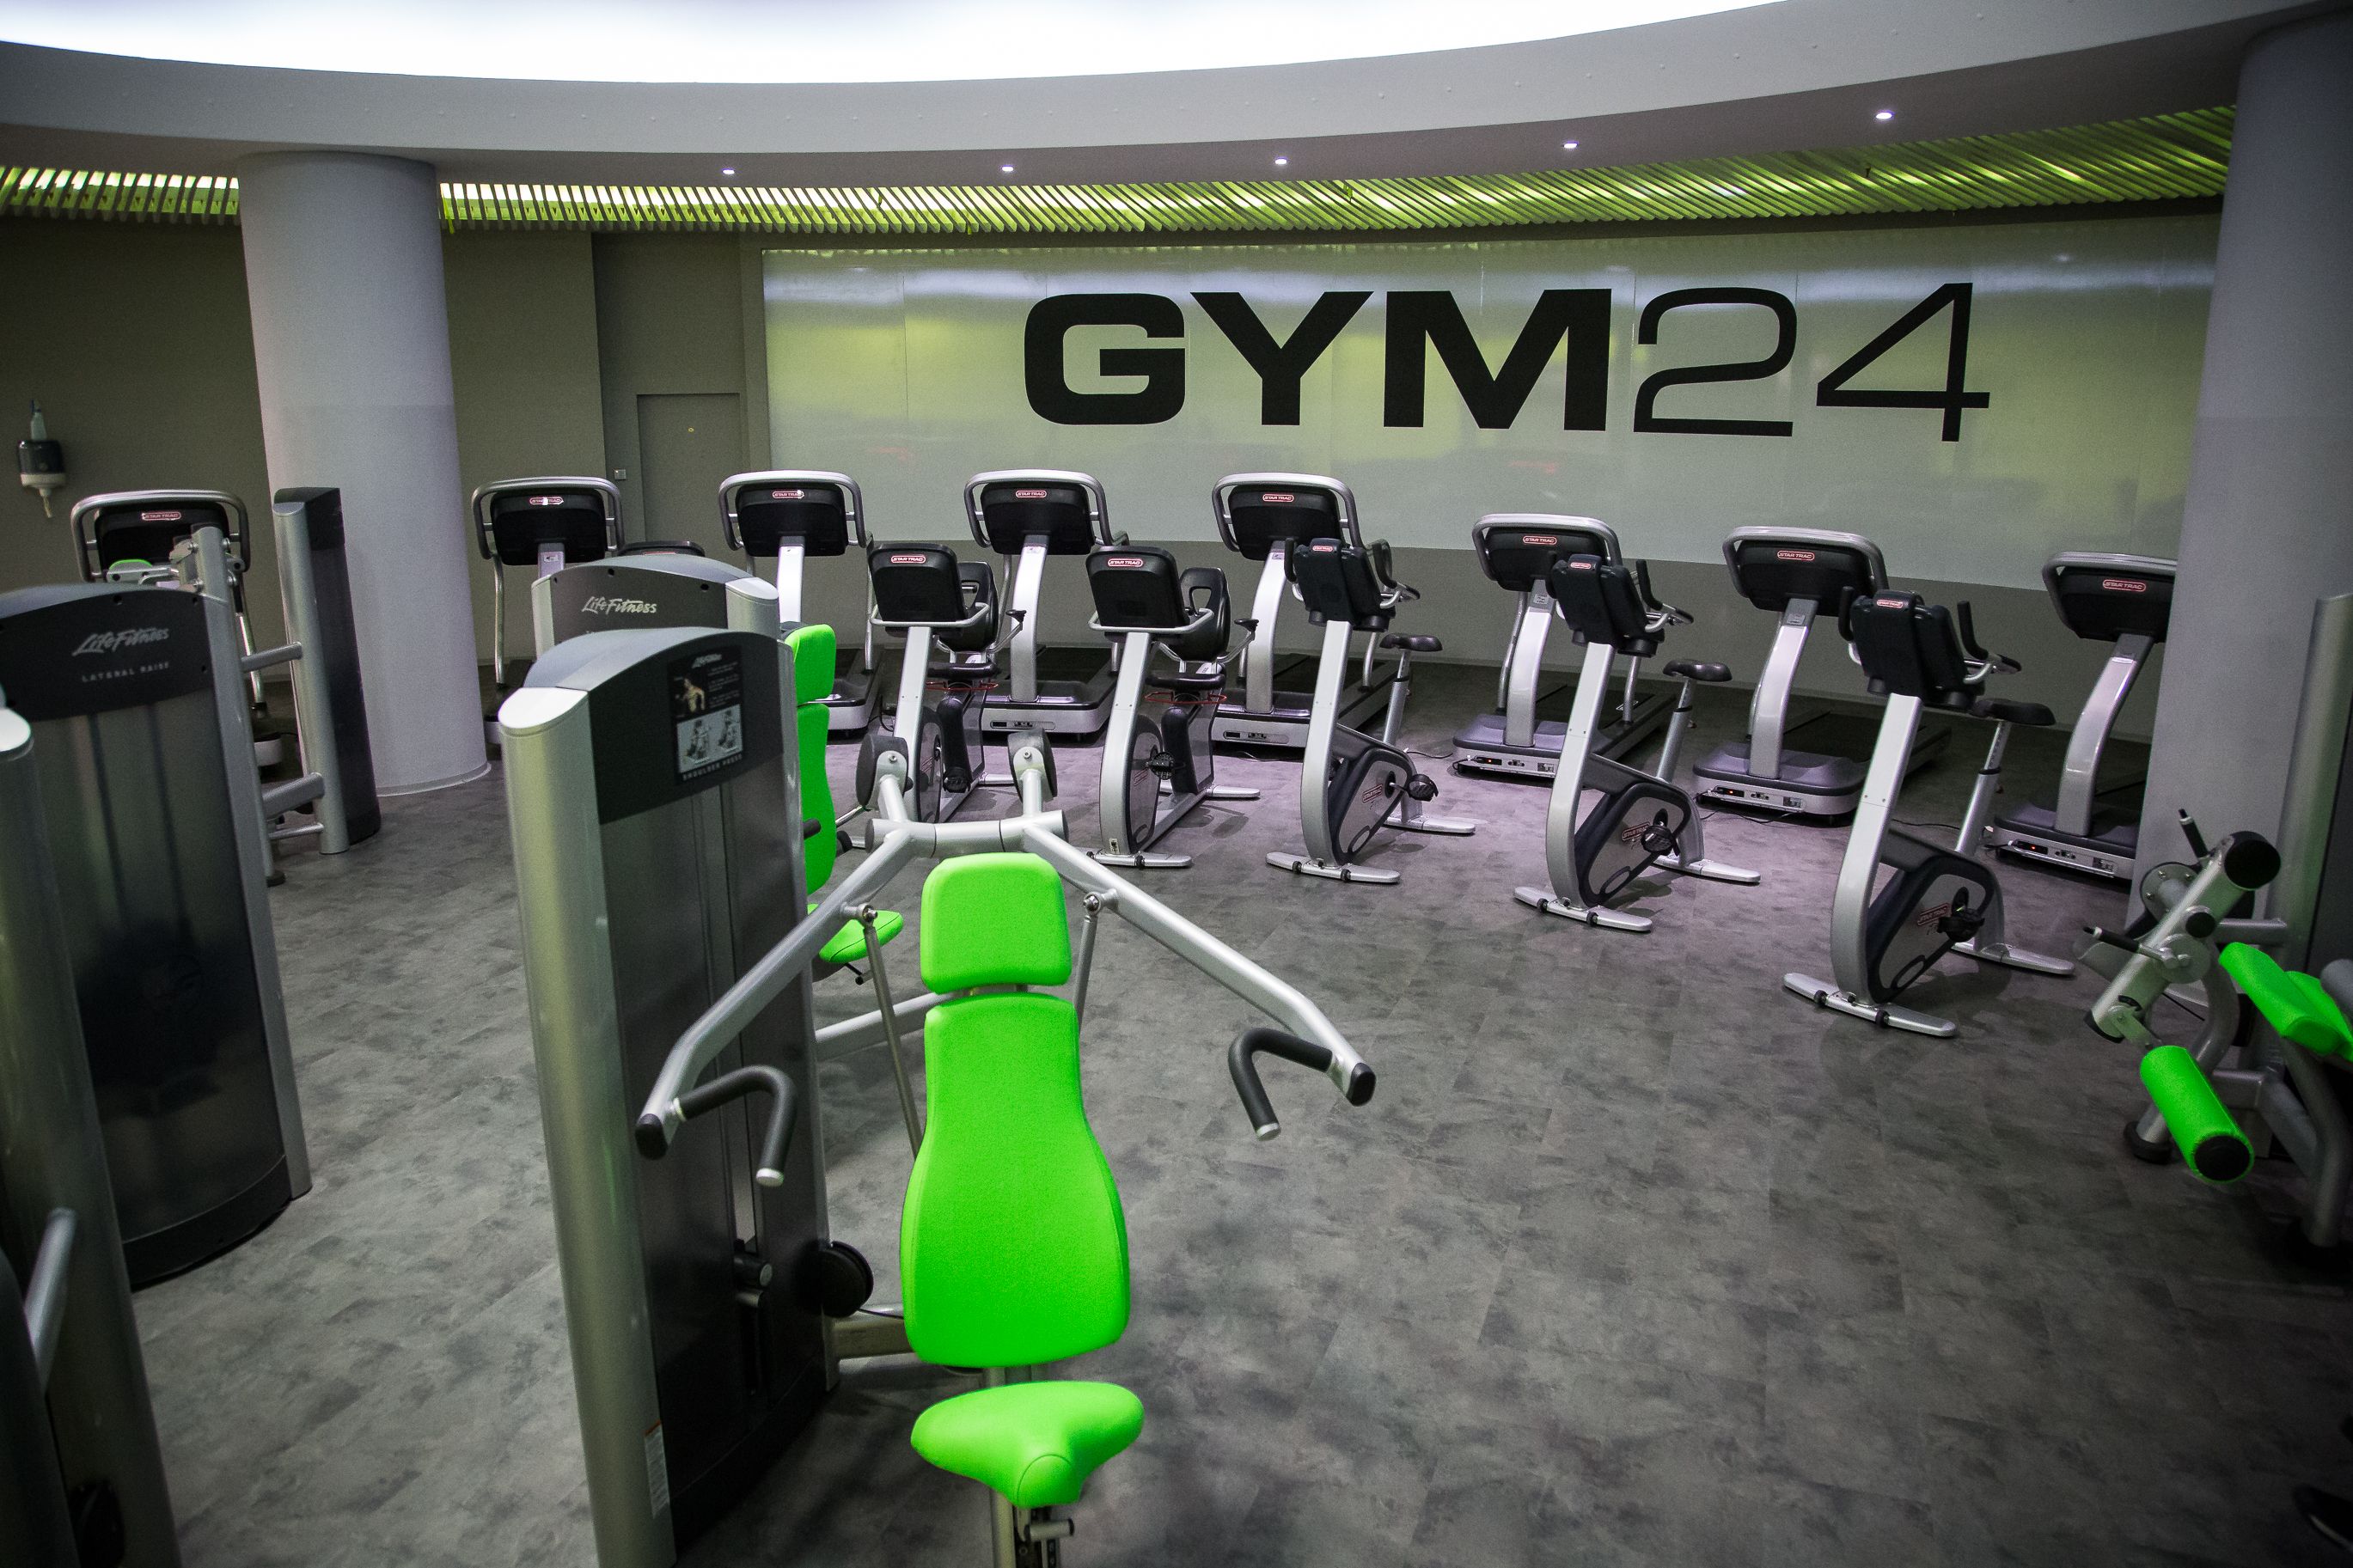 Gym 24